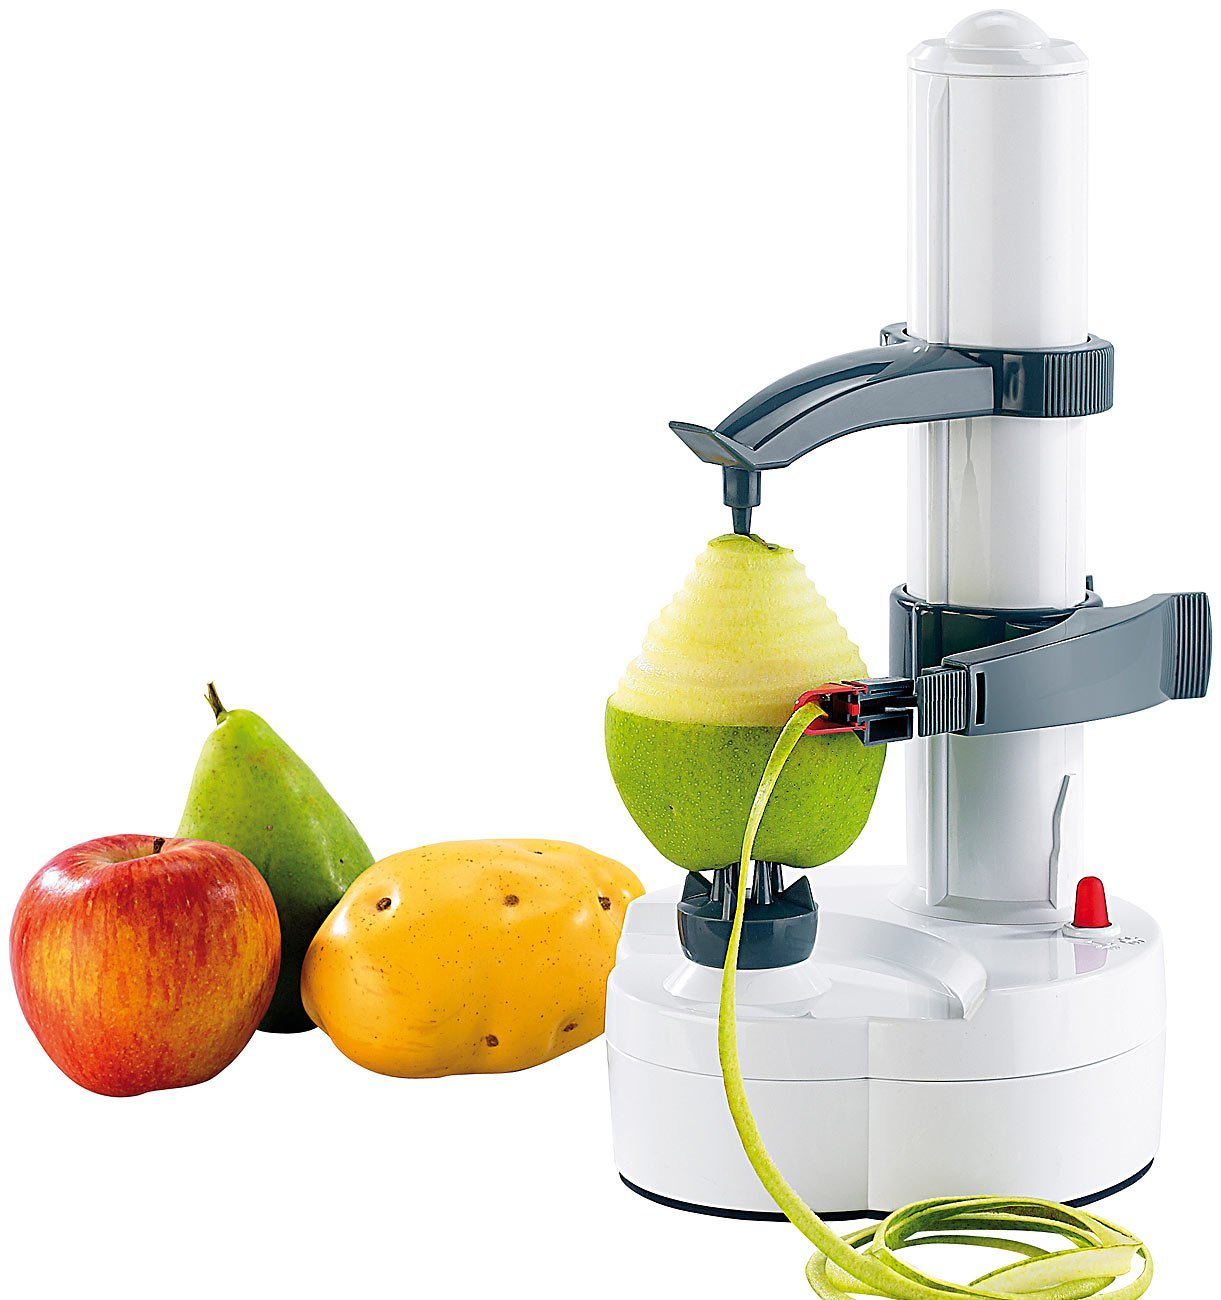 con lama in acciaio inox Pelapatate elettrico per frutta e verdura pelapatate elettrico per frutta e verdura Apple Peeler 